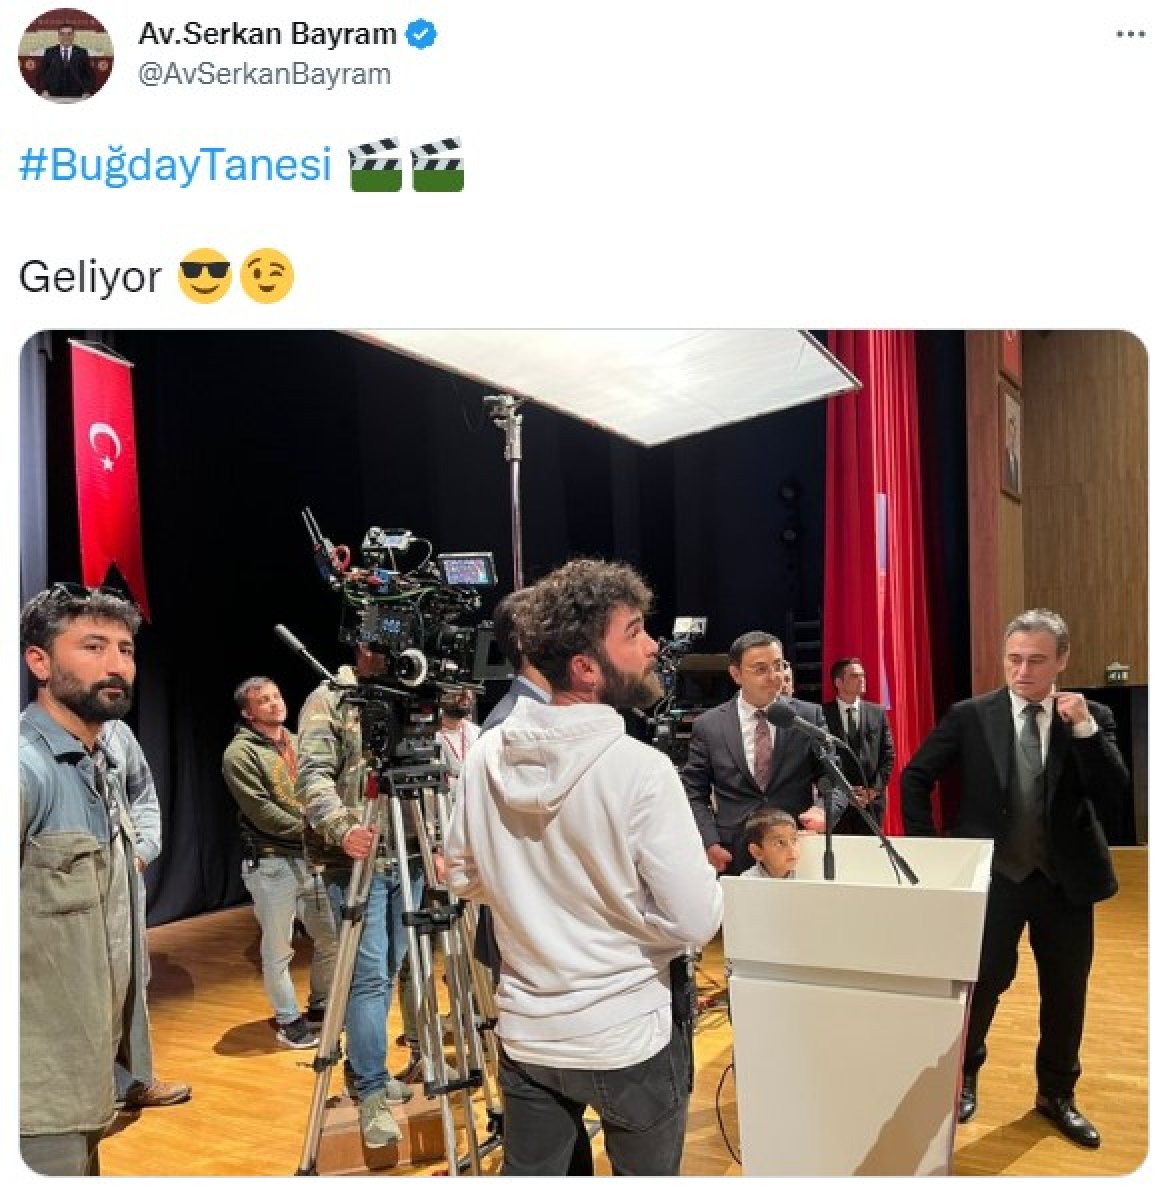 AK Parti İstanbul Milletvekili Serkan Bayram’ın hayatı film oldu